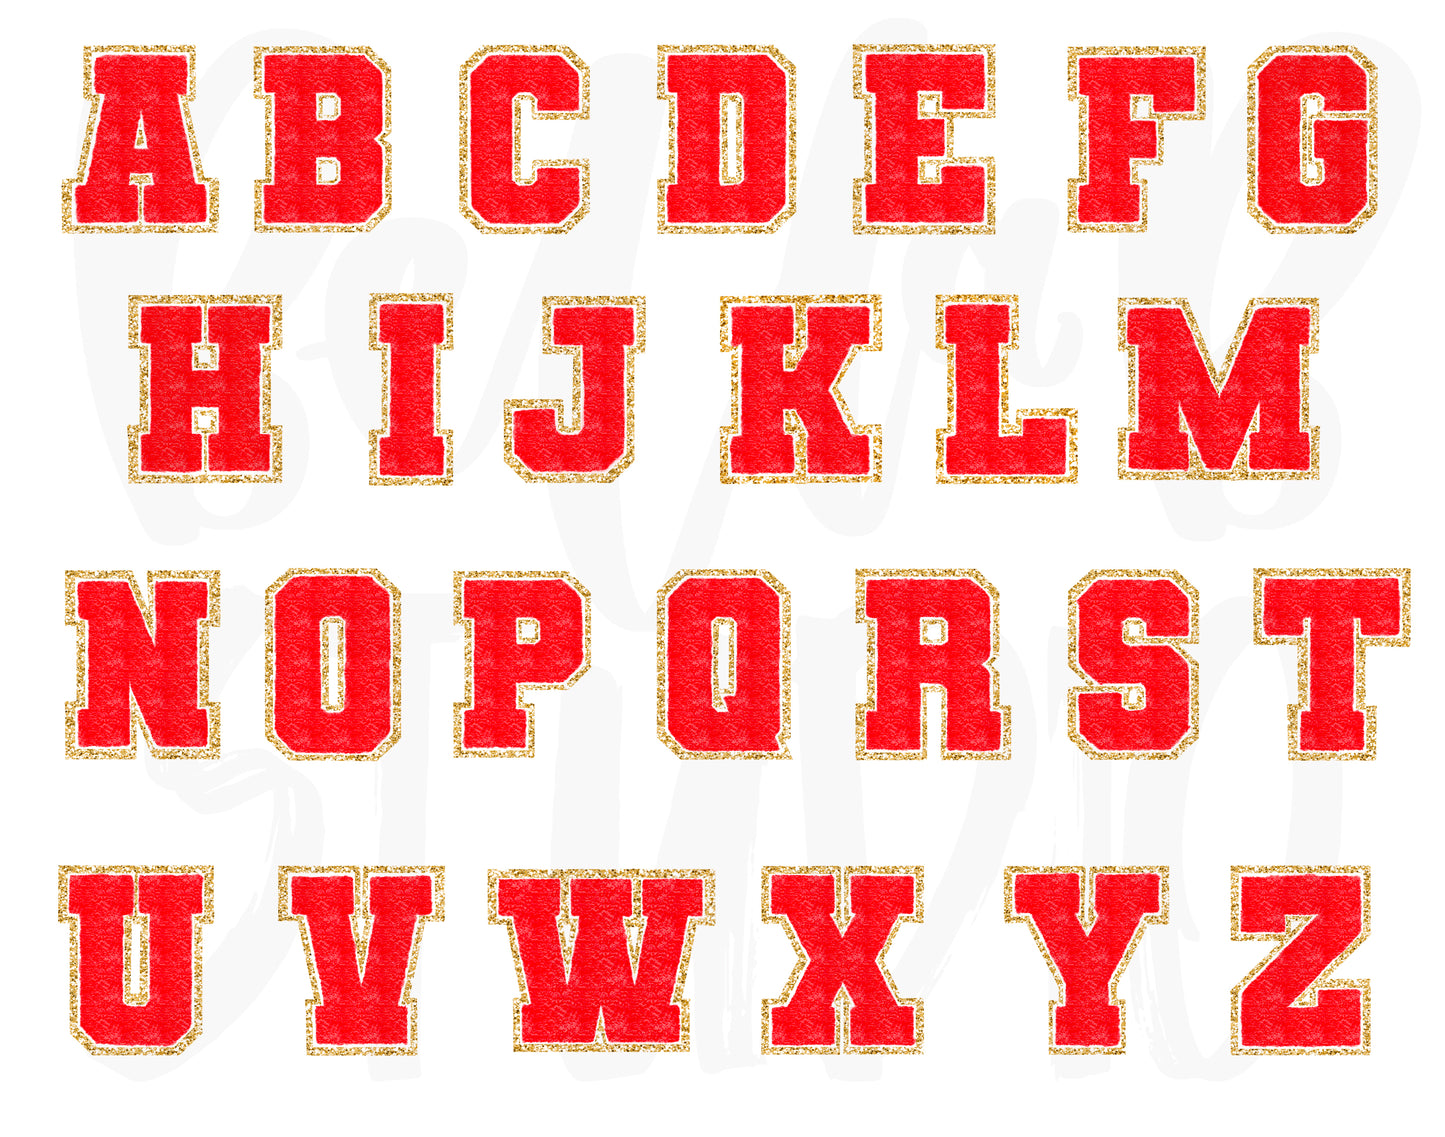 Faux Chenille Alphabet Set RED - GOLD GLITTER